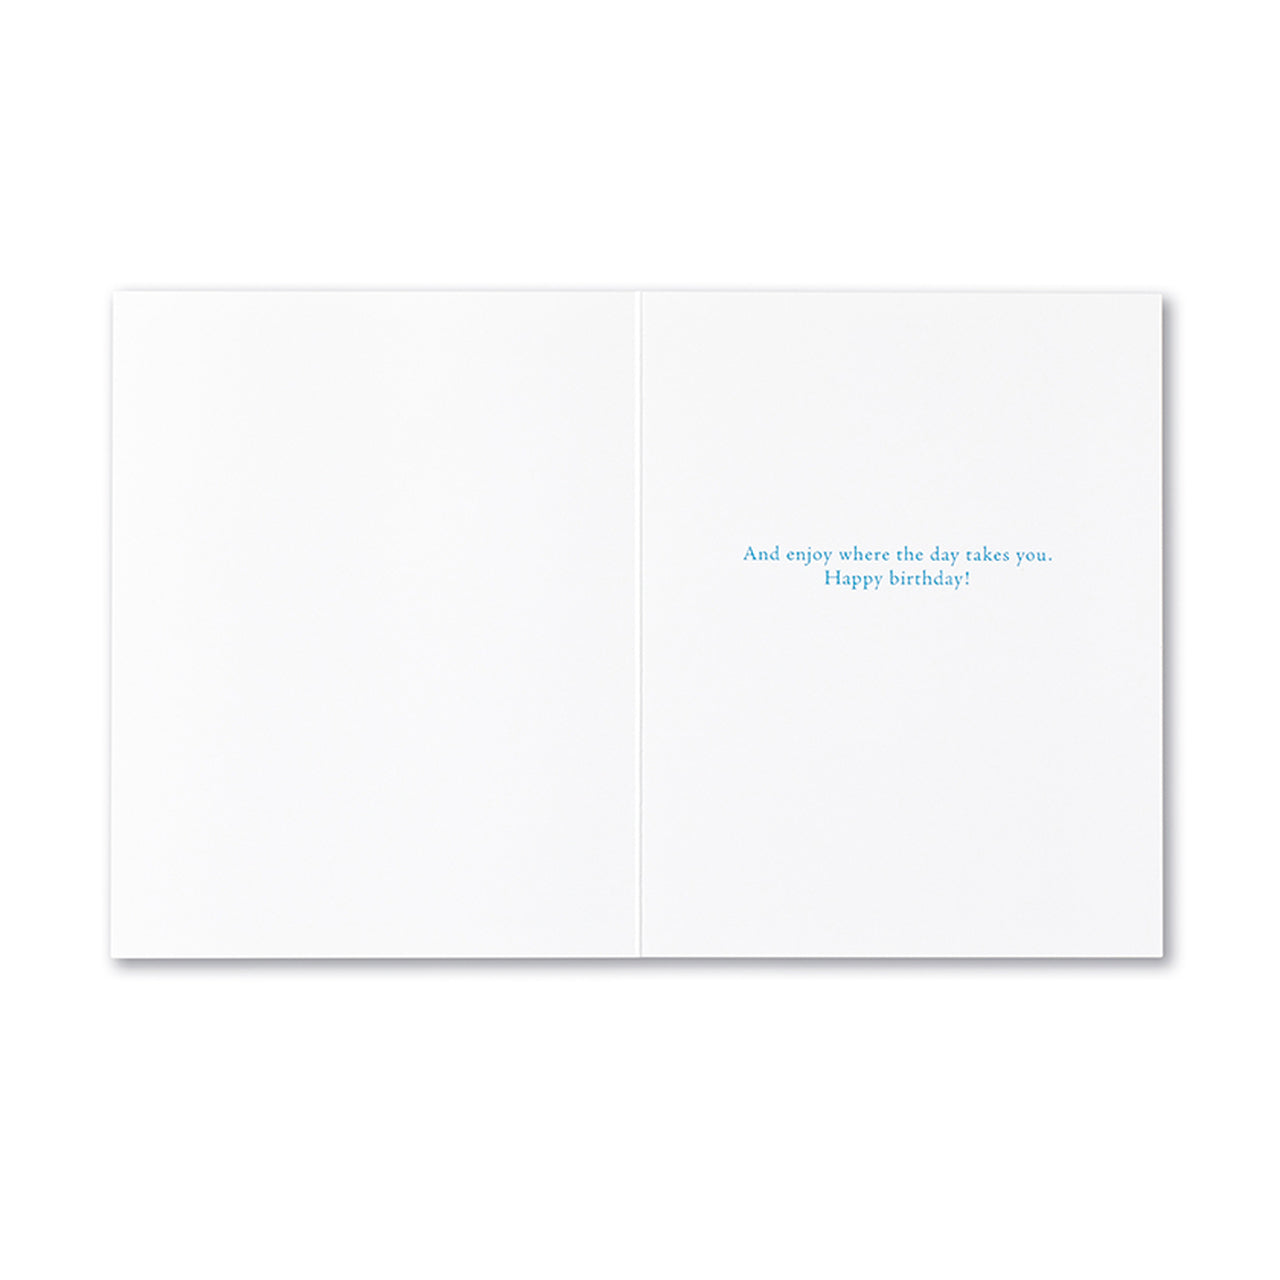 Positively Green Greeting Card - Birthday - Enjoy The Journey, Enjoy Every Moment  —MATT BIONDI - Mellow Monkey